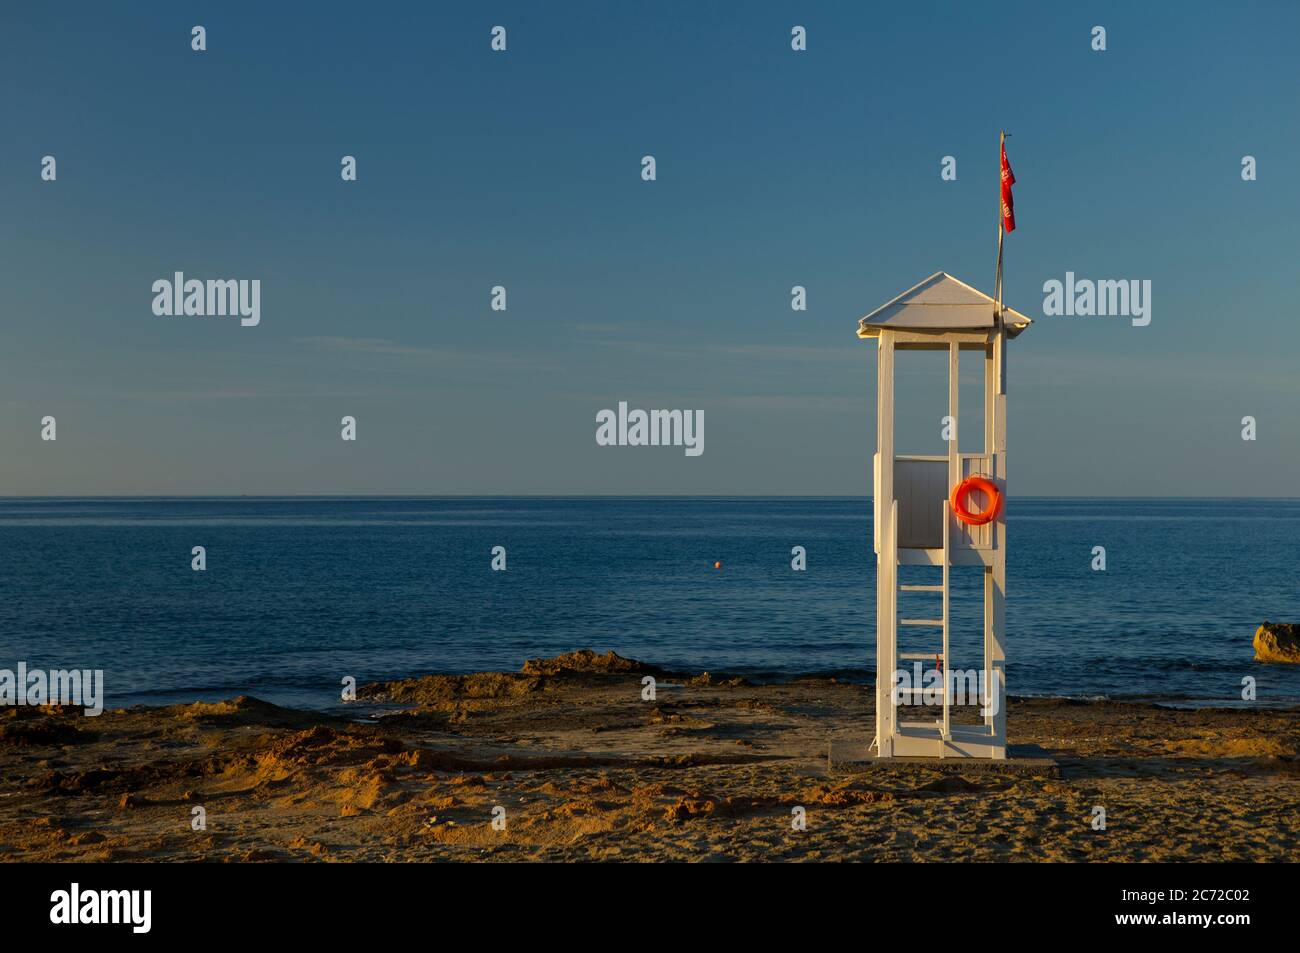 Lifeguard tower on a beach Stock Photo